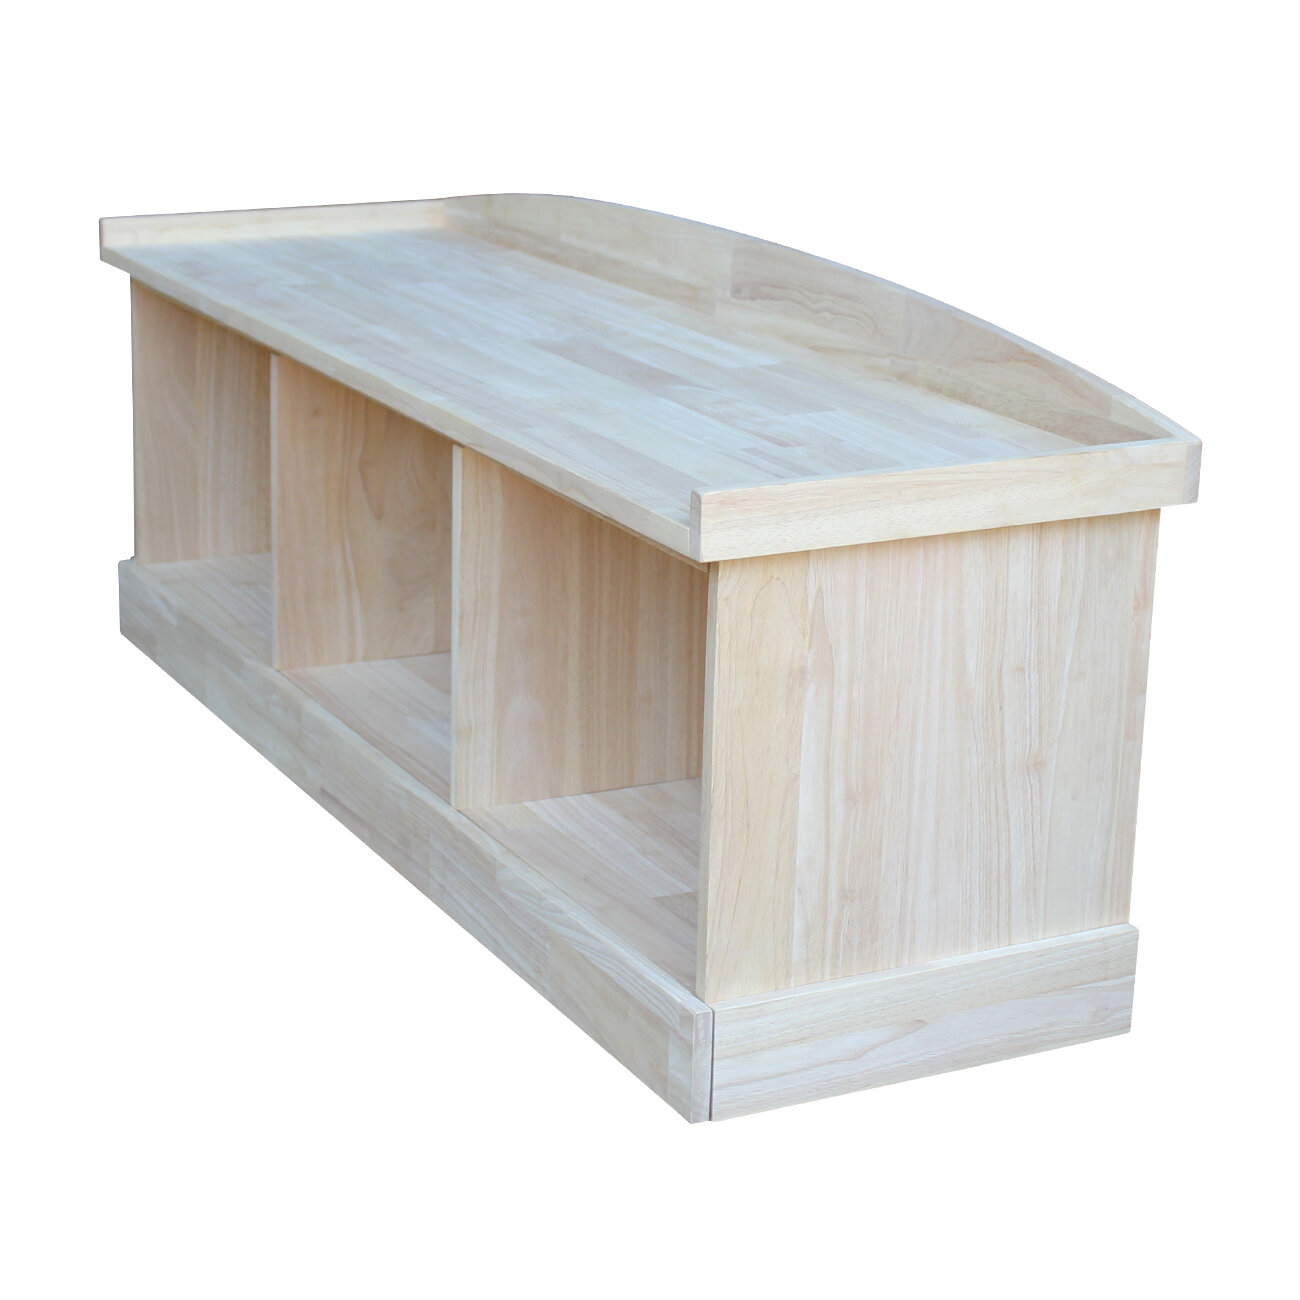 Red Barrel Studio Melynda Wood Storage Bench Reviews Wayfair